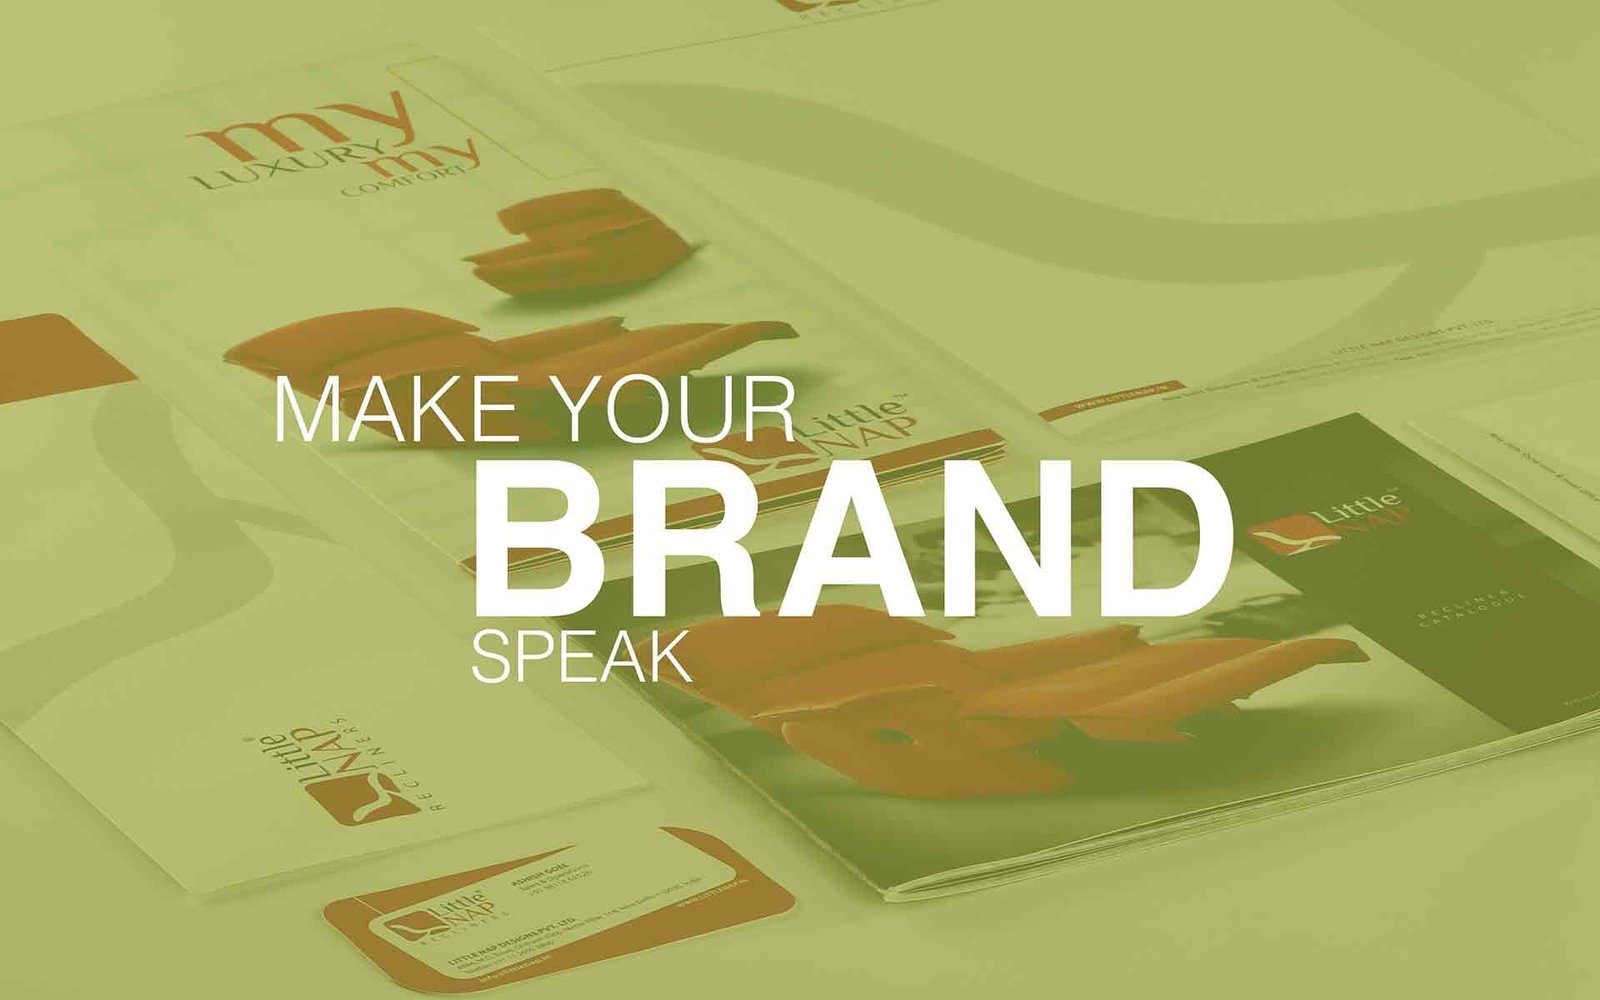 Make Your Brand Speak